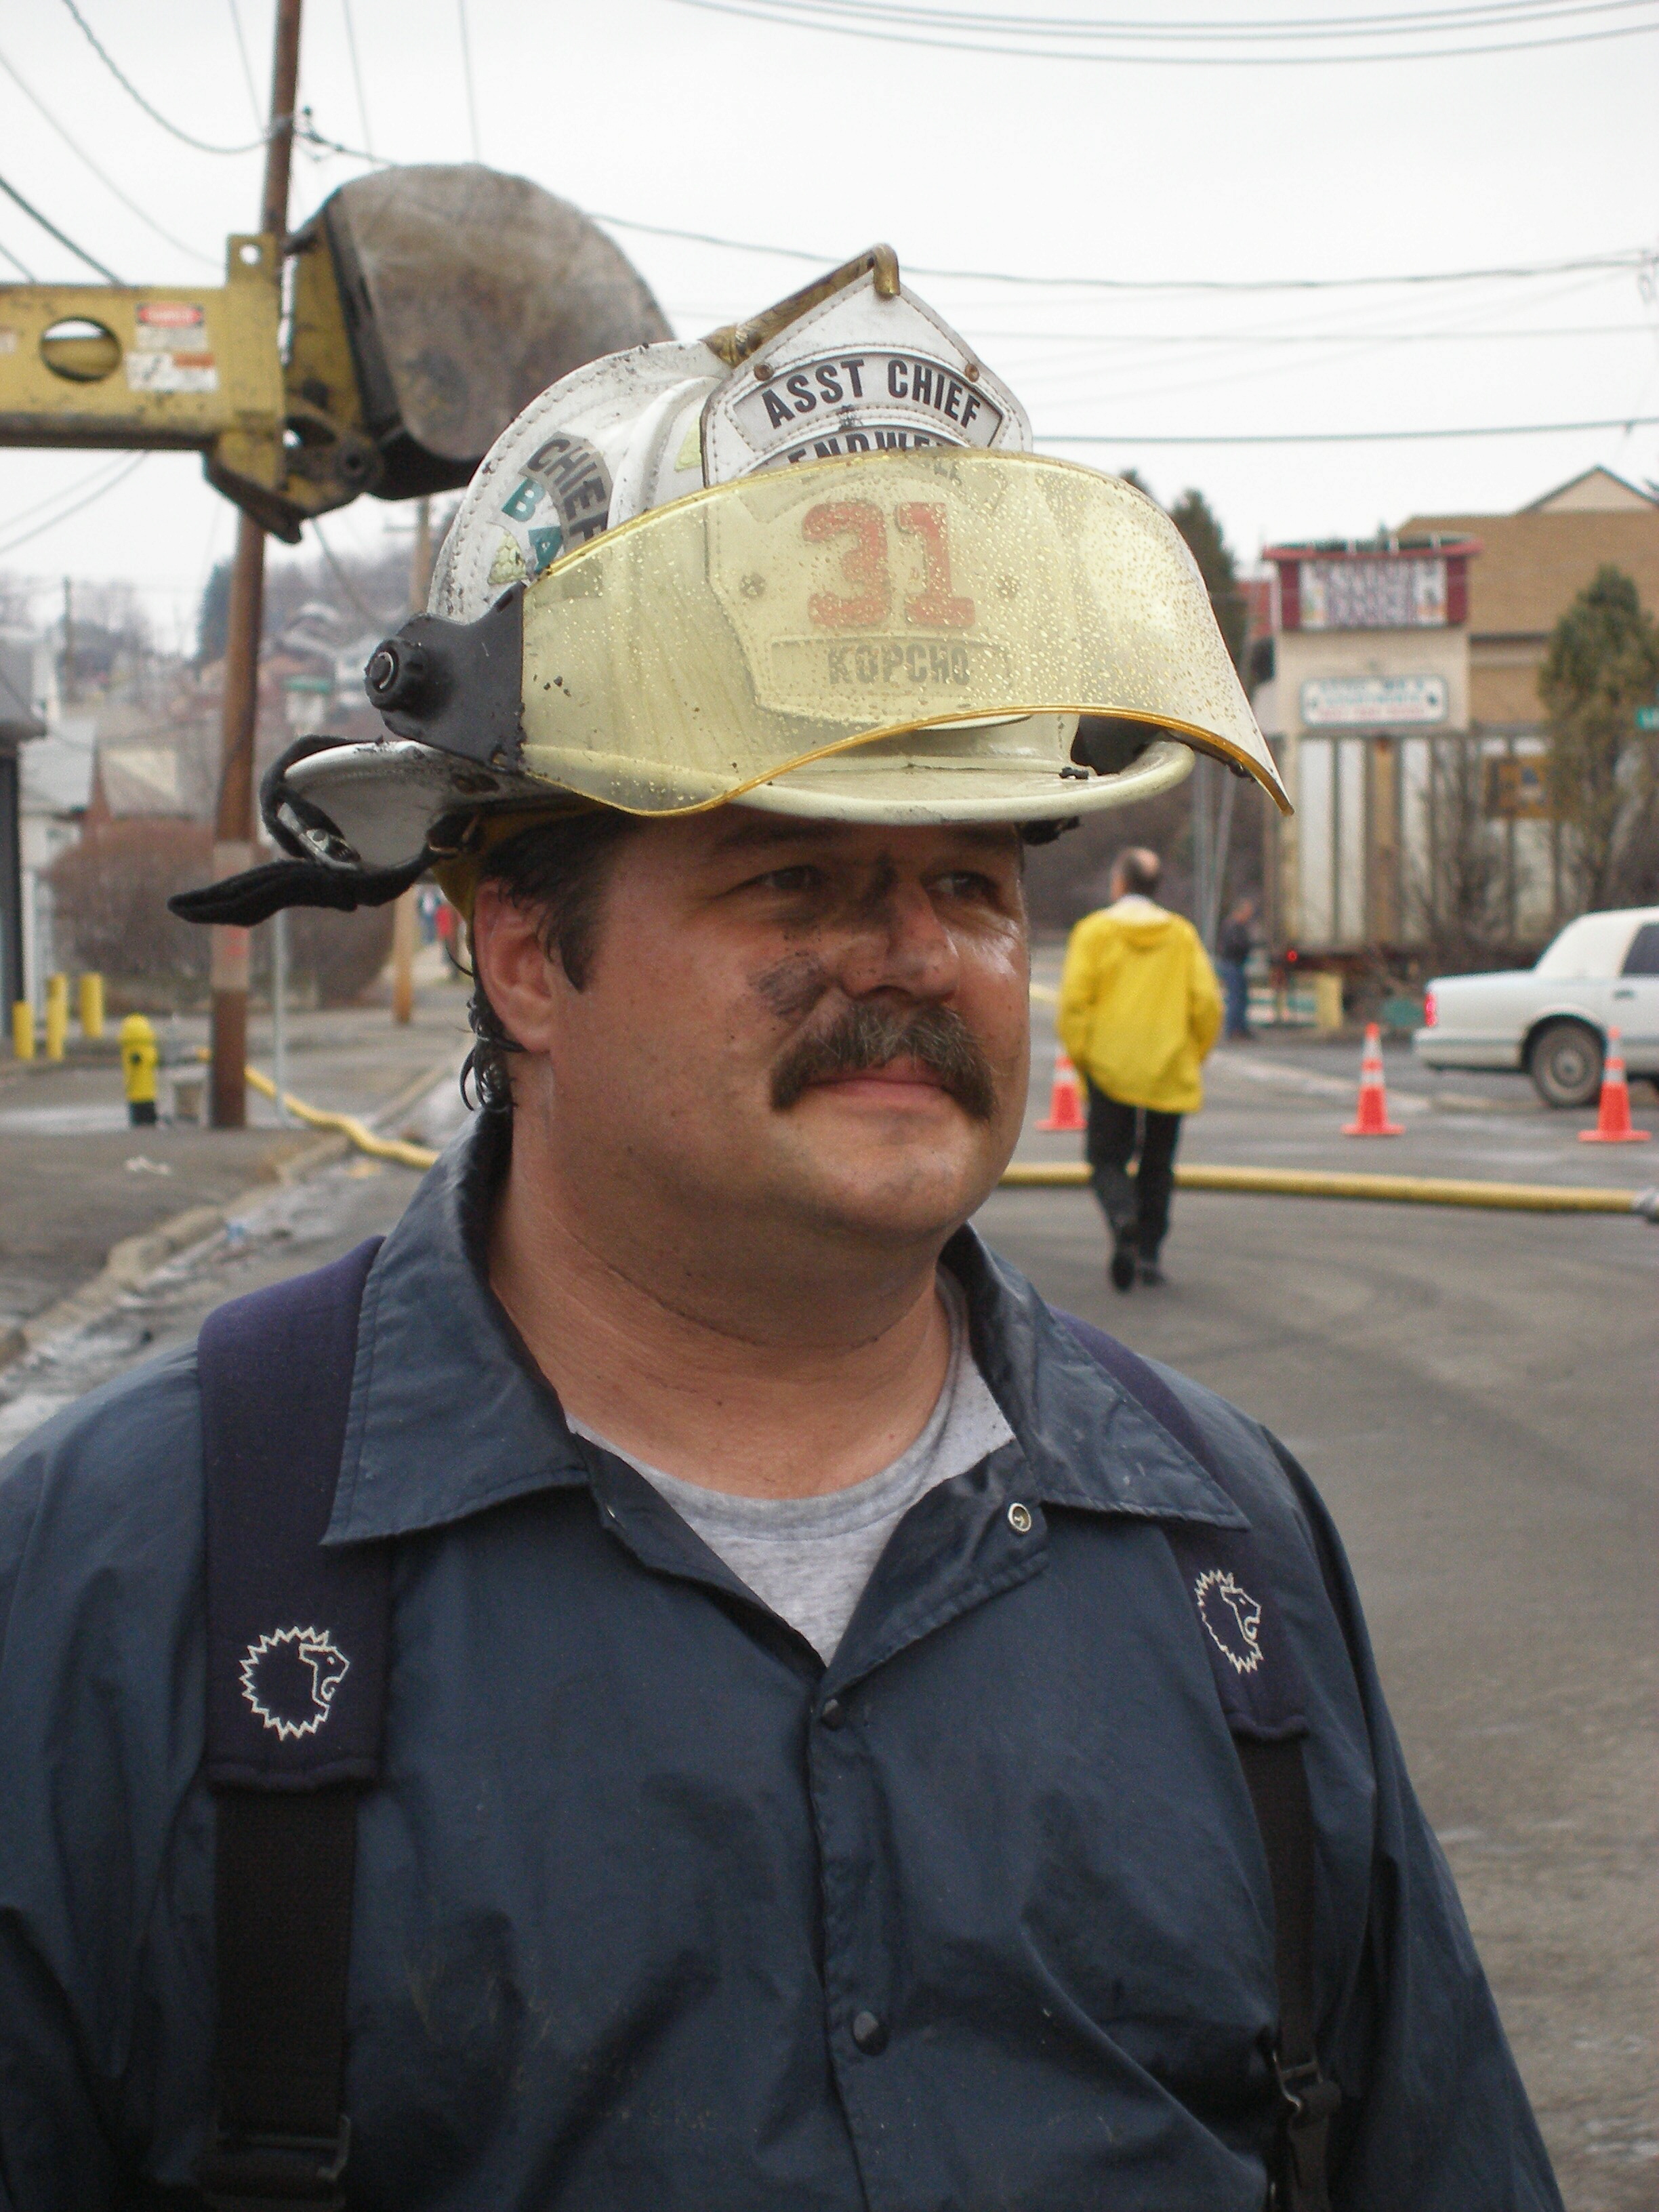 03-13-06  Response - Fire - Delaware Ave